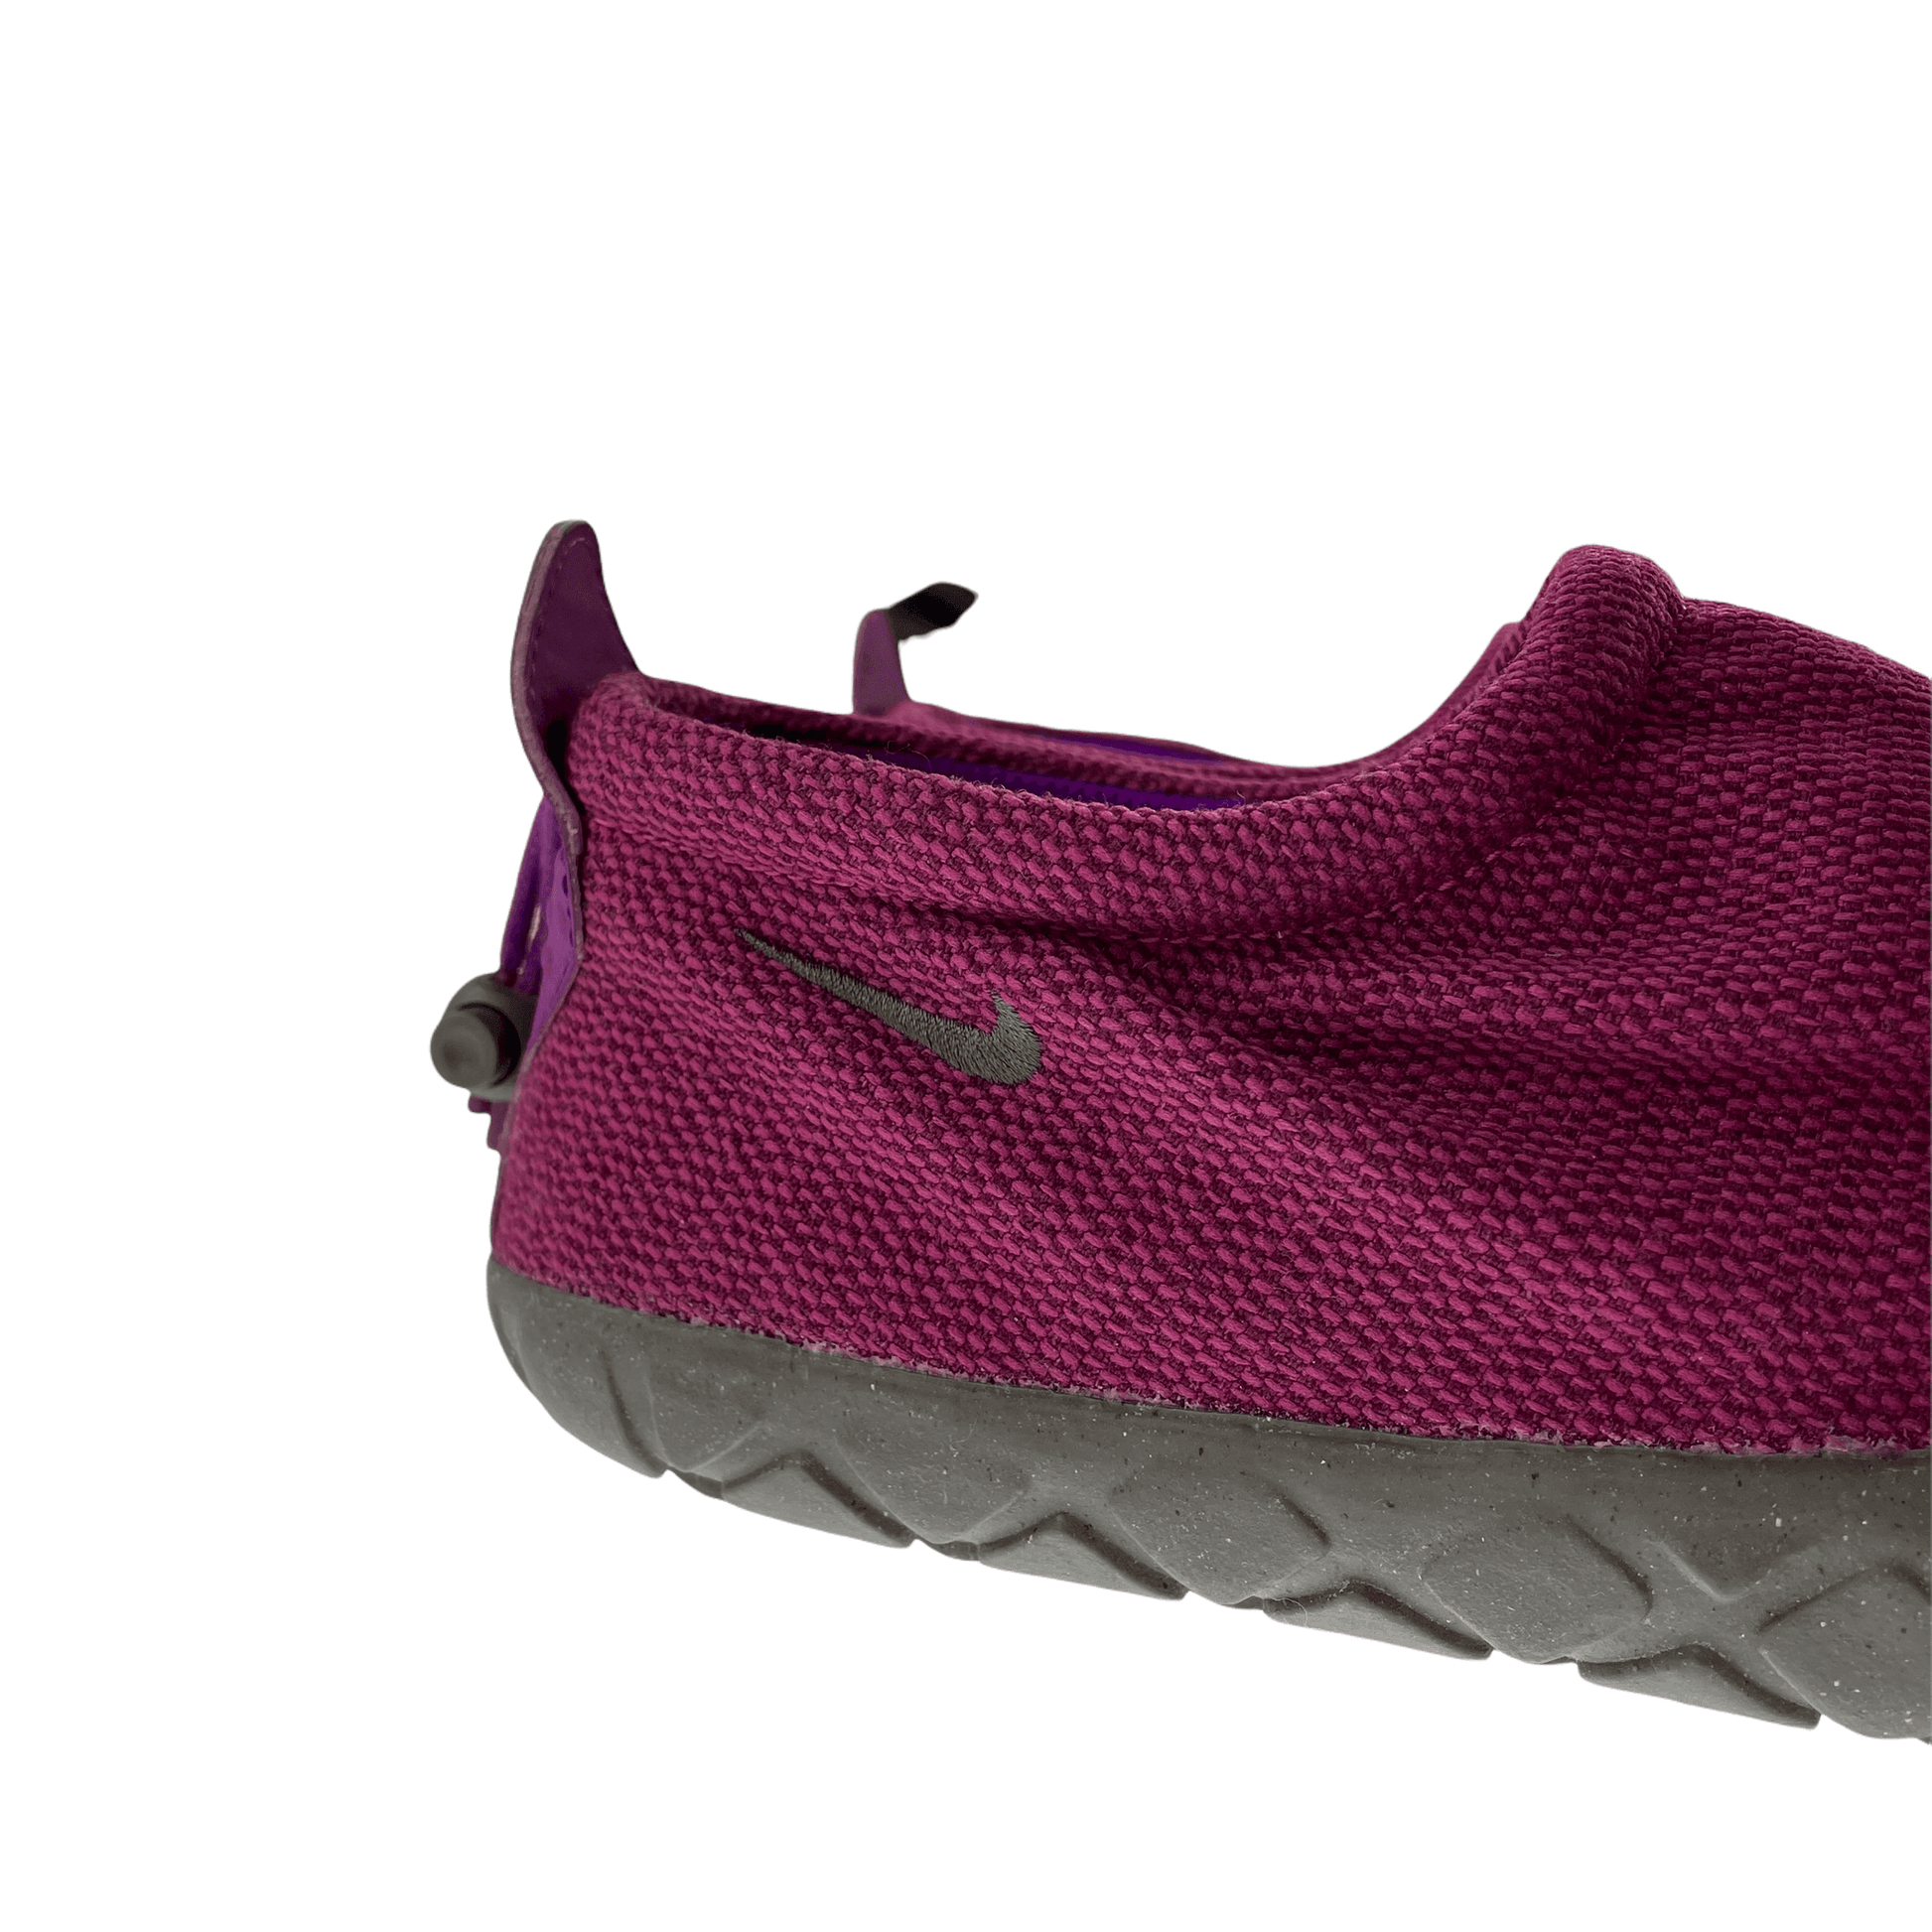 Nike Moc slip on shoes size UK 8 - Known Source